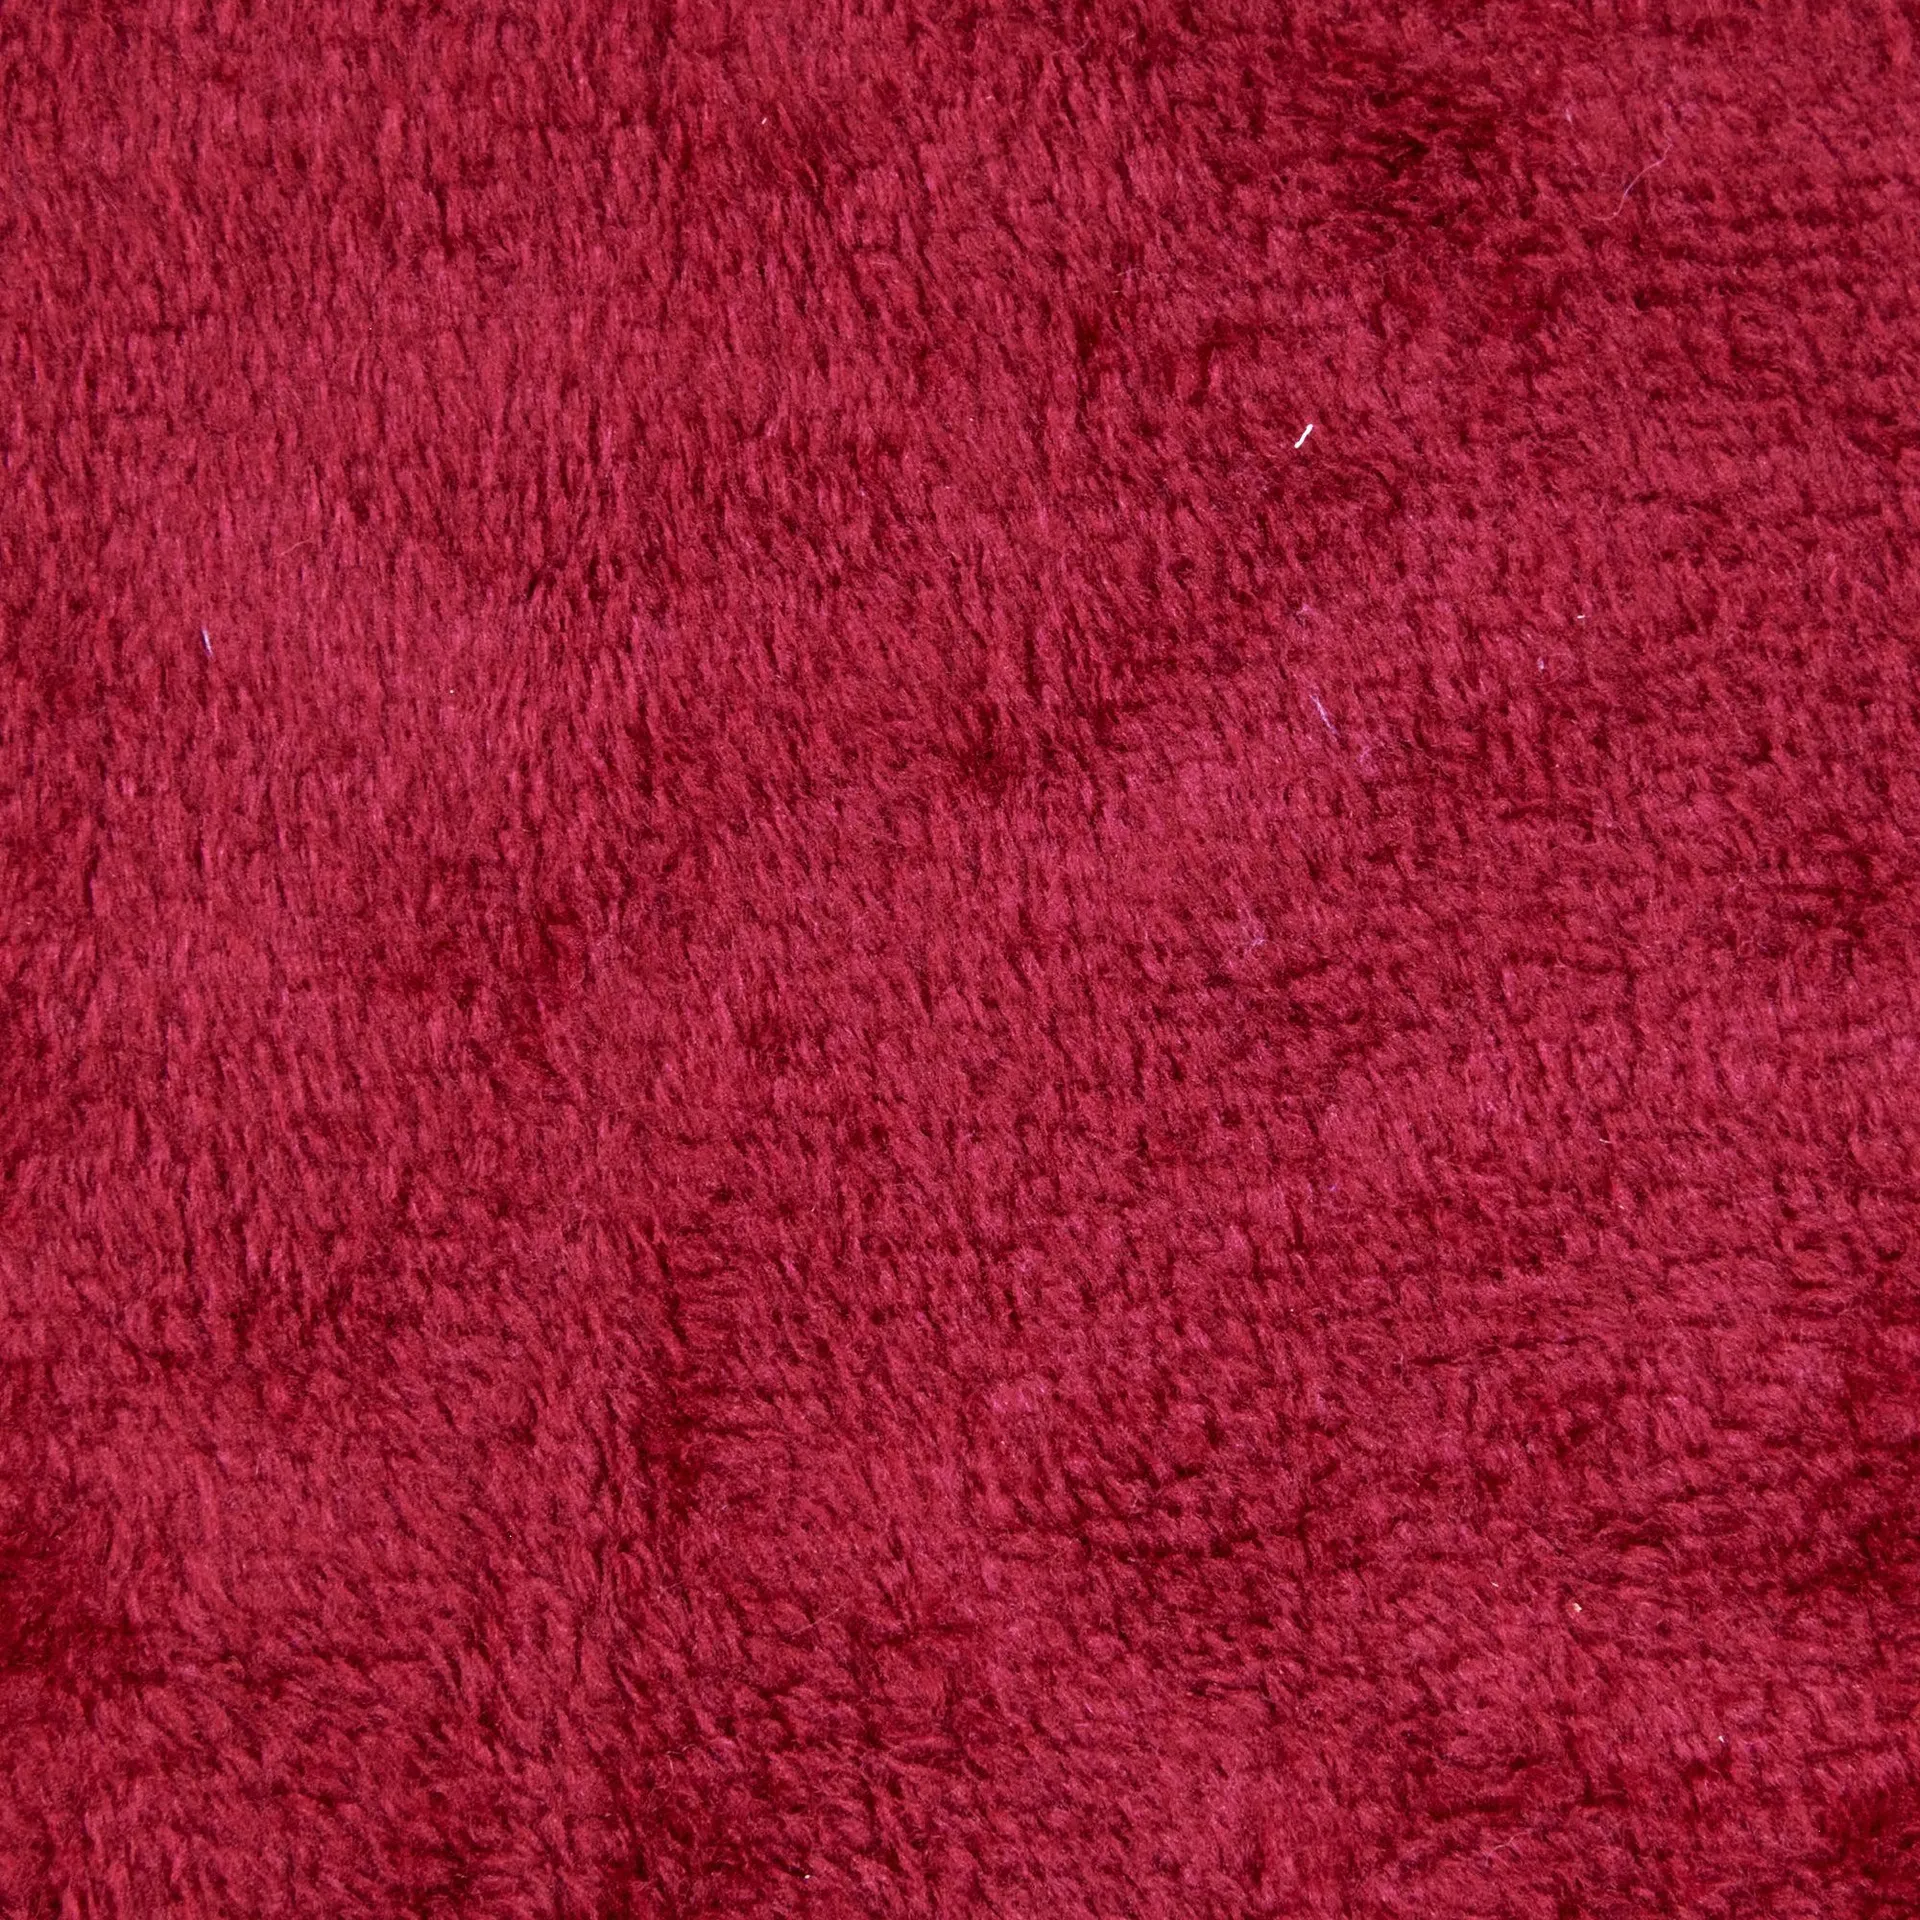 Coral Fleece Plain Fabric, Red- Width 155cm